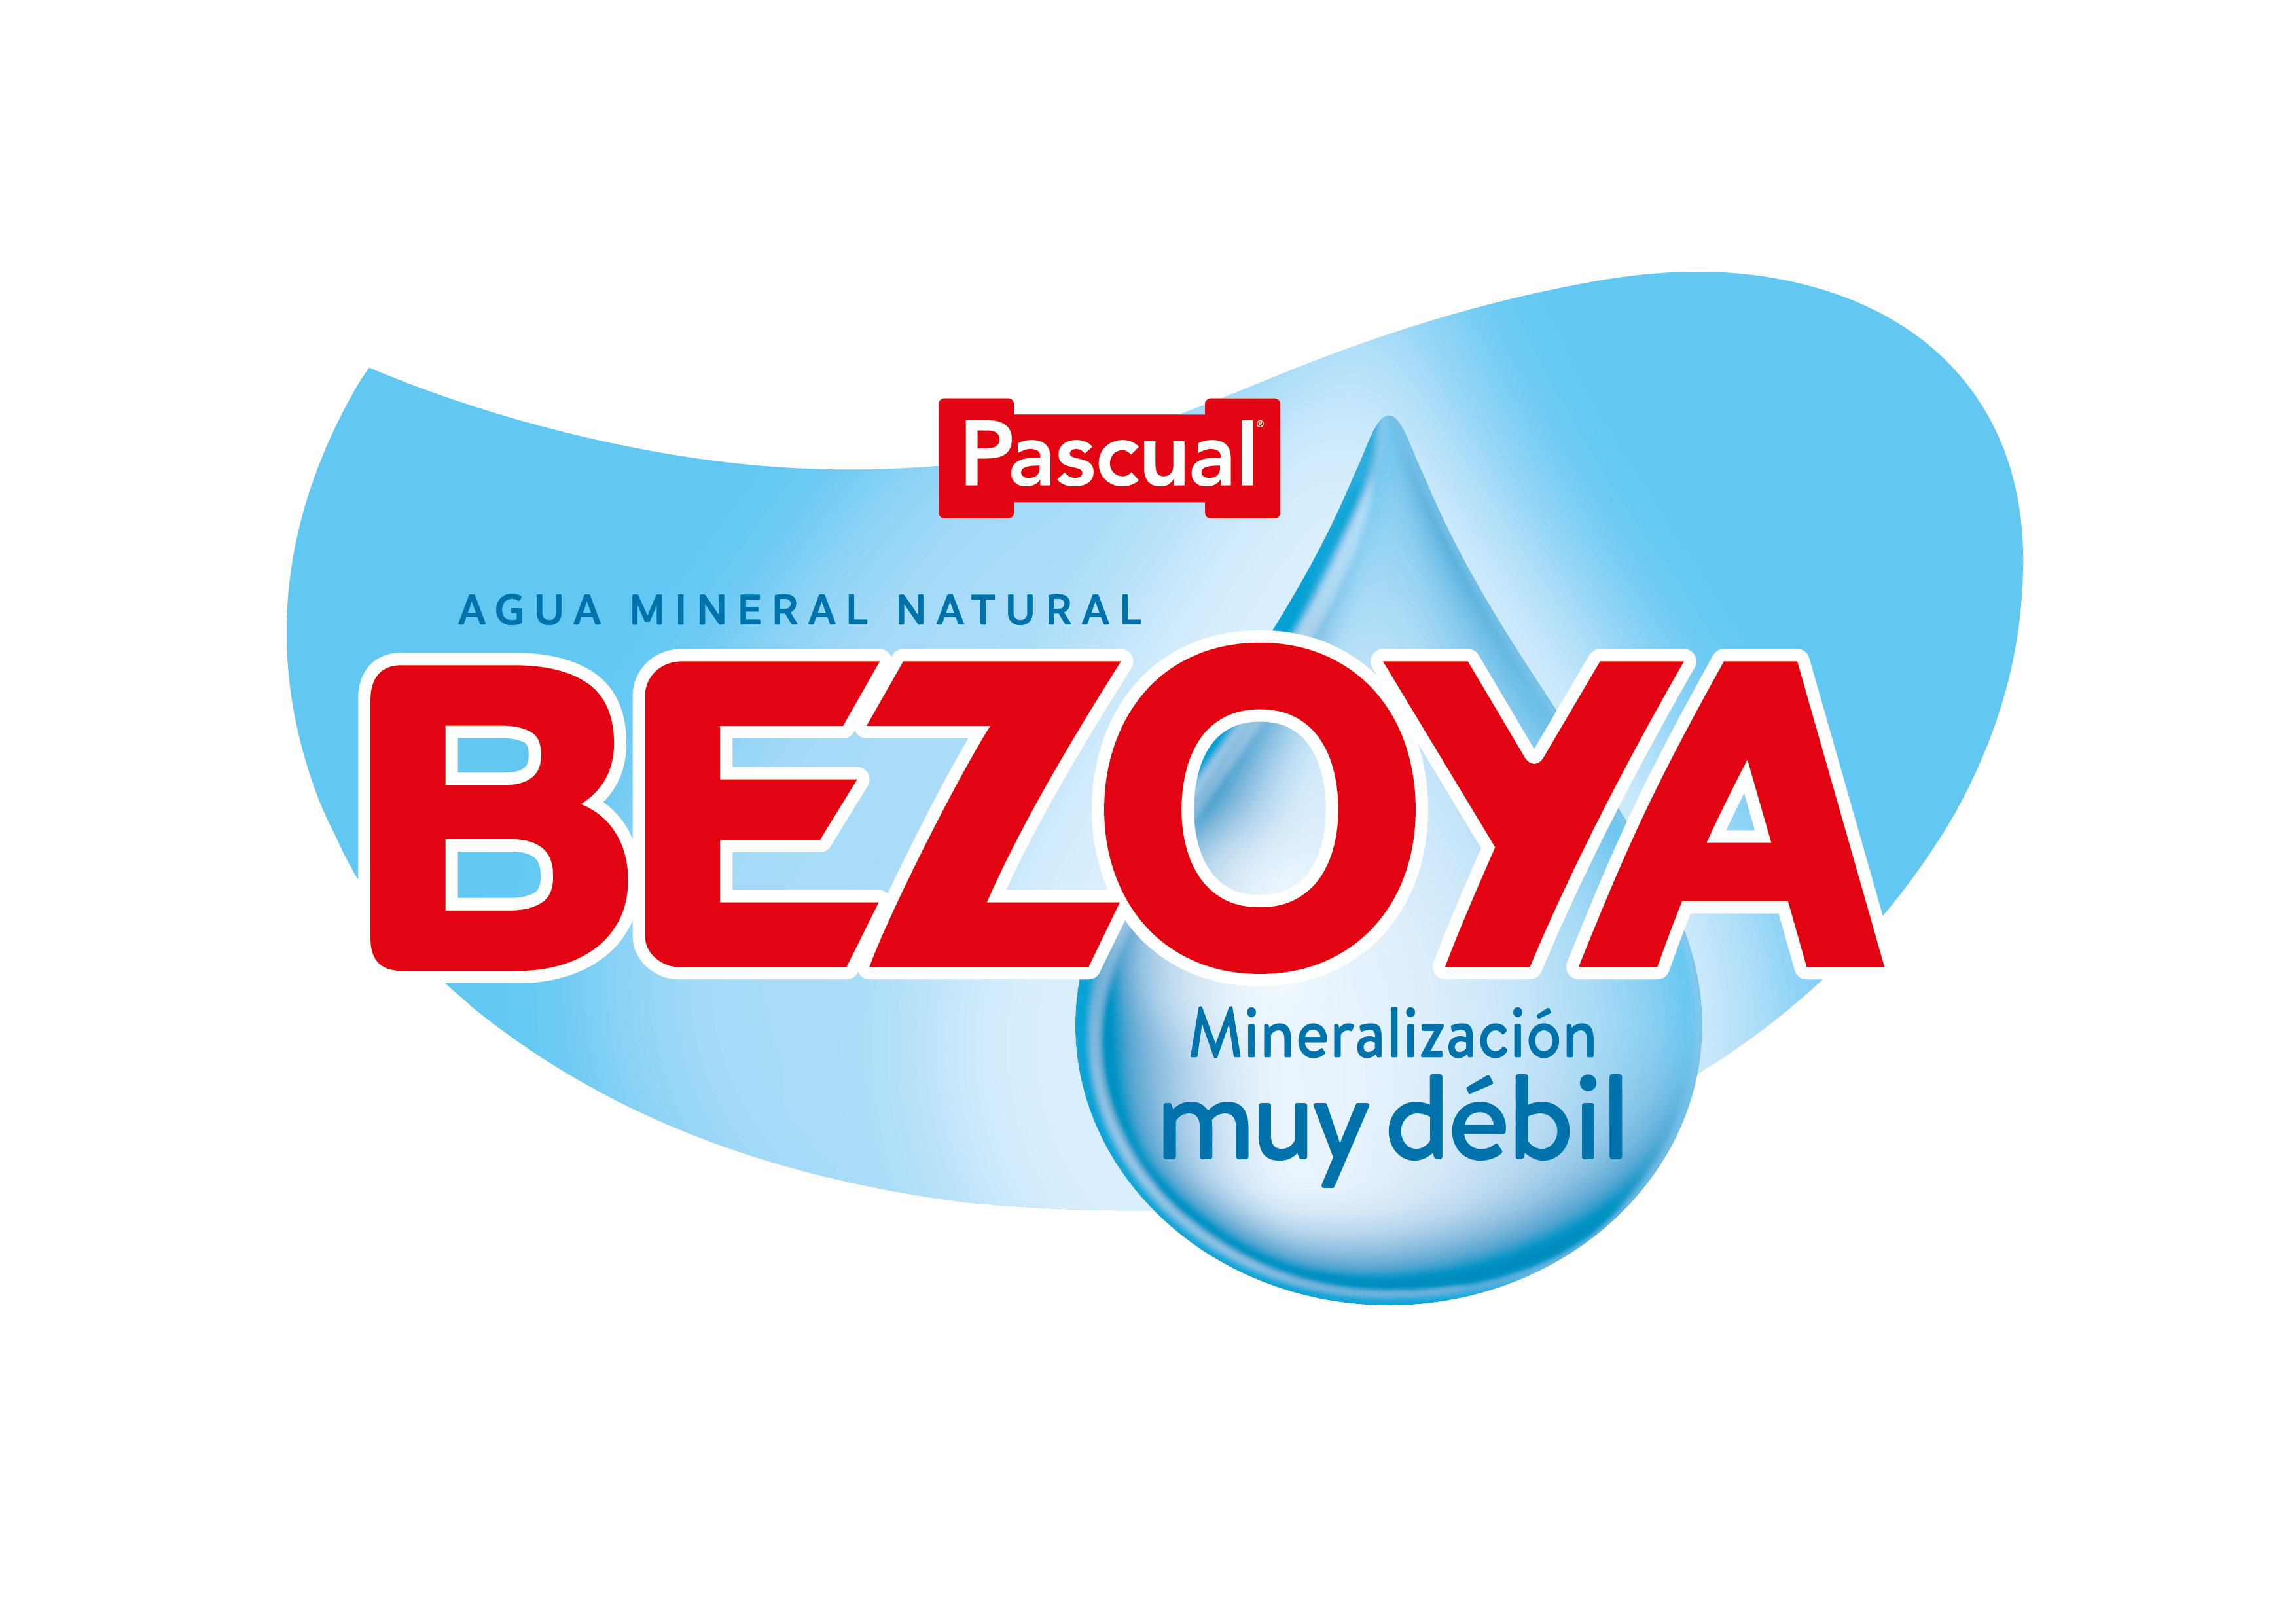 Agua mineral natural Bezoya